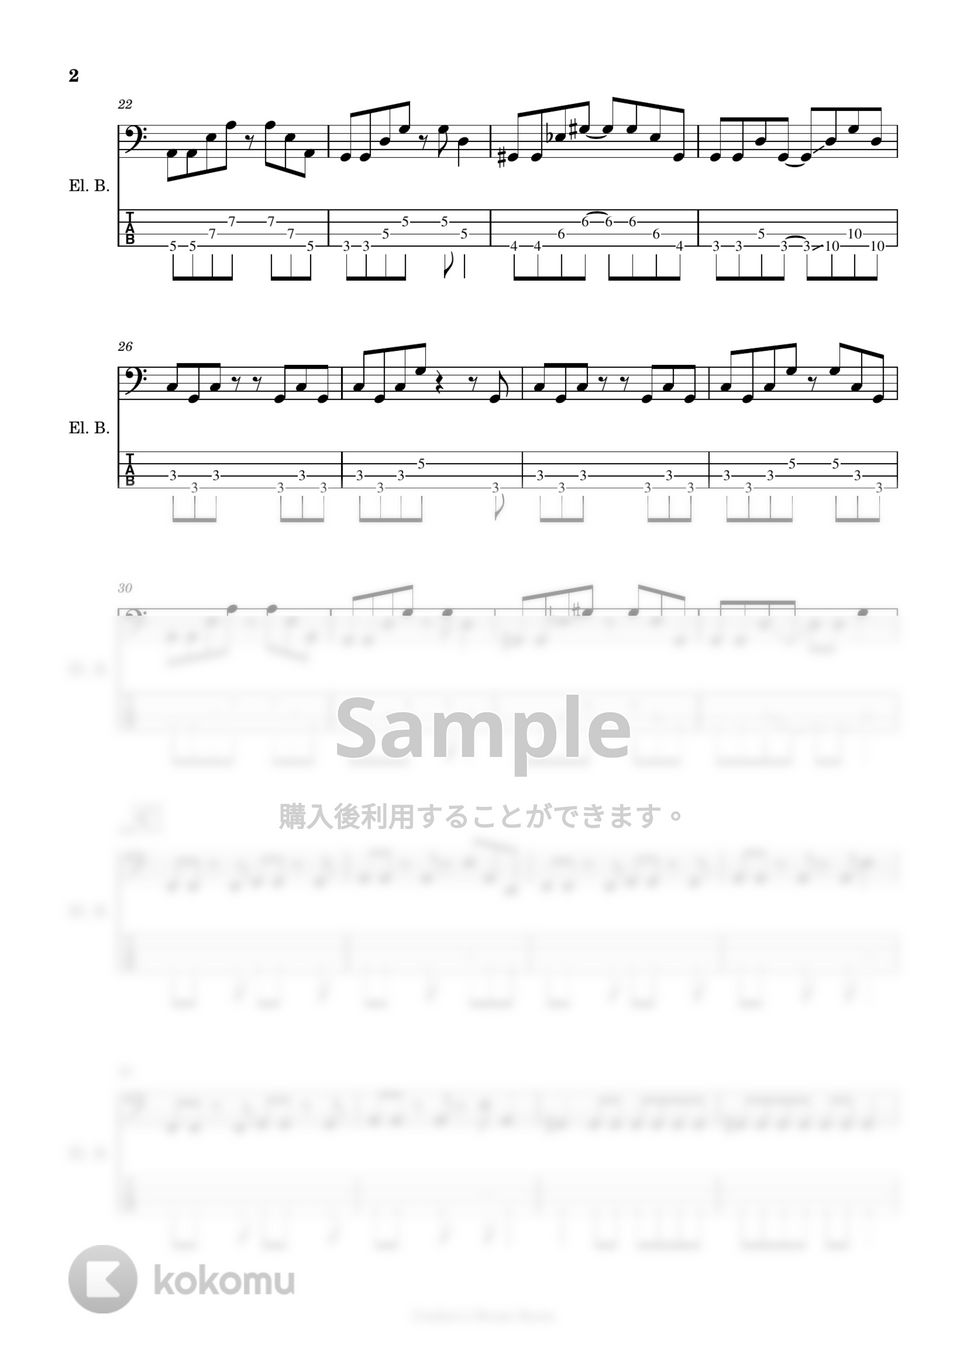 RADWIMPS - 【ベース楽譜】 サイハテアイニ / RADWIMPS - Saihate Aini / RADWIMPS 【BassScore】 by Cookie's Drum Score